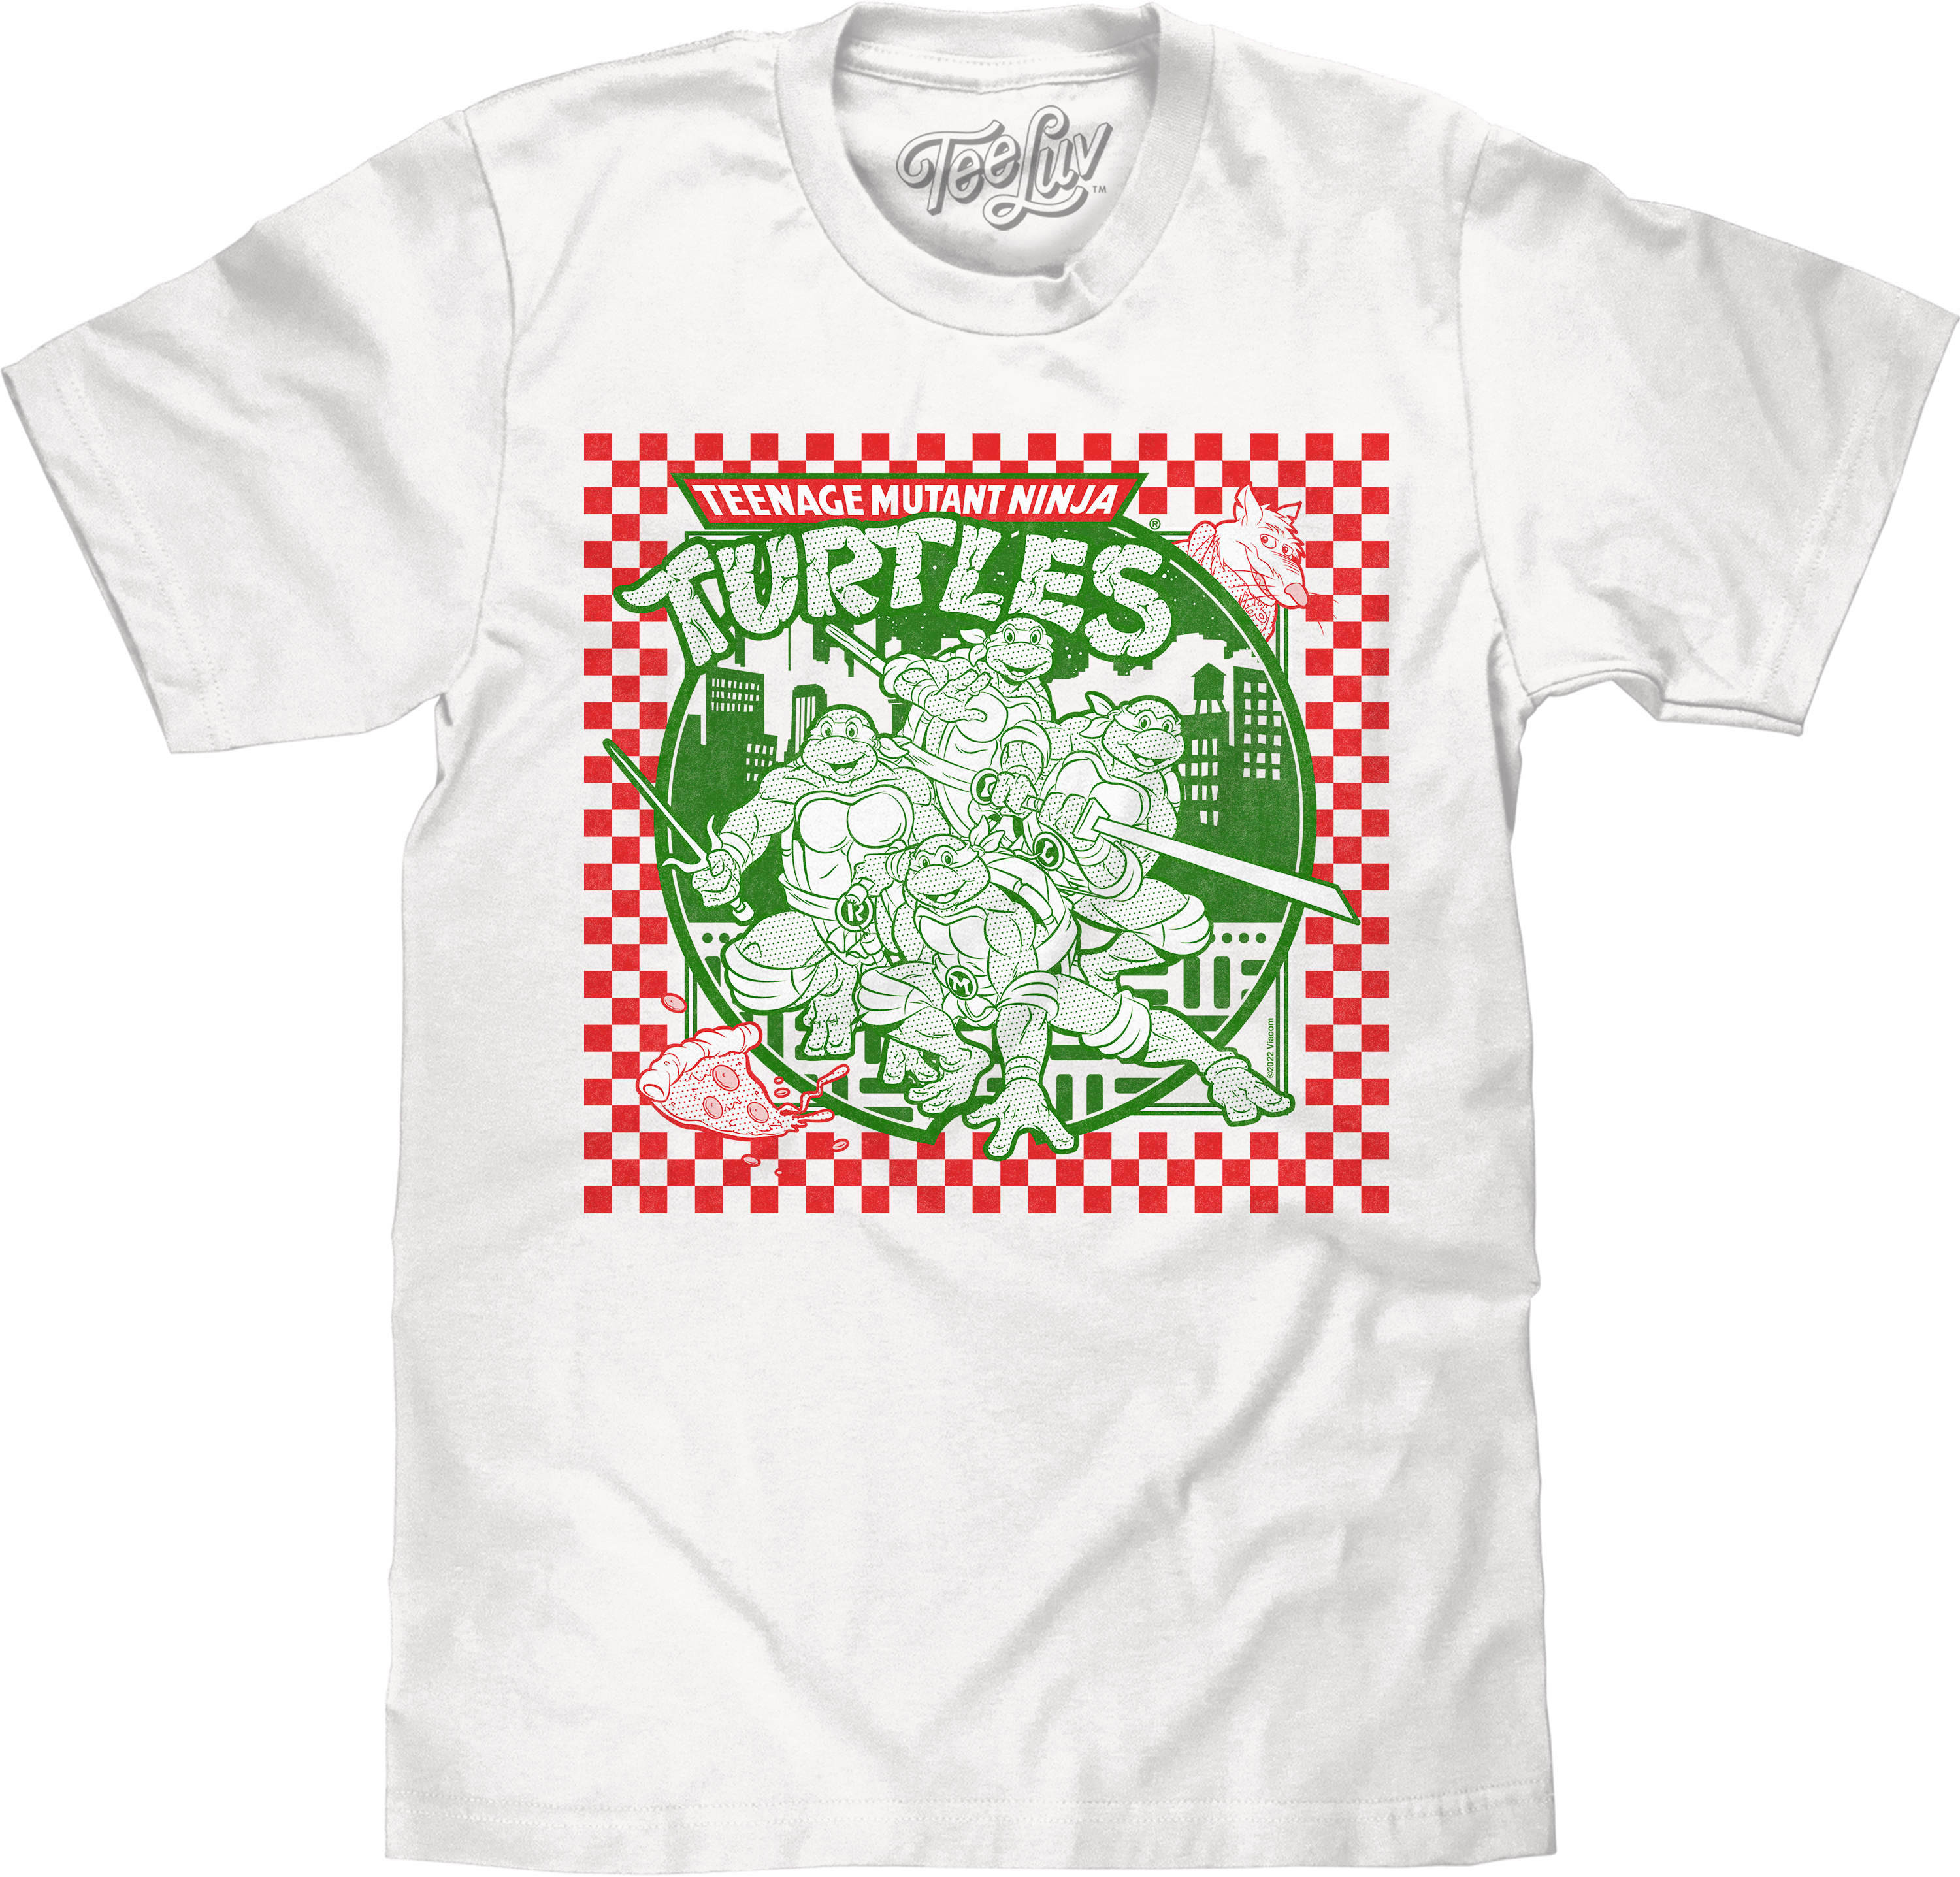 Teenage Mutant Ninja Turtles TMNT Men's Green T-Shirt Tee Shirt-XX-Large